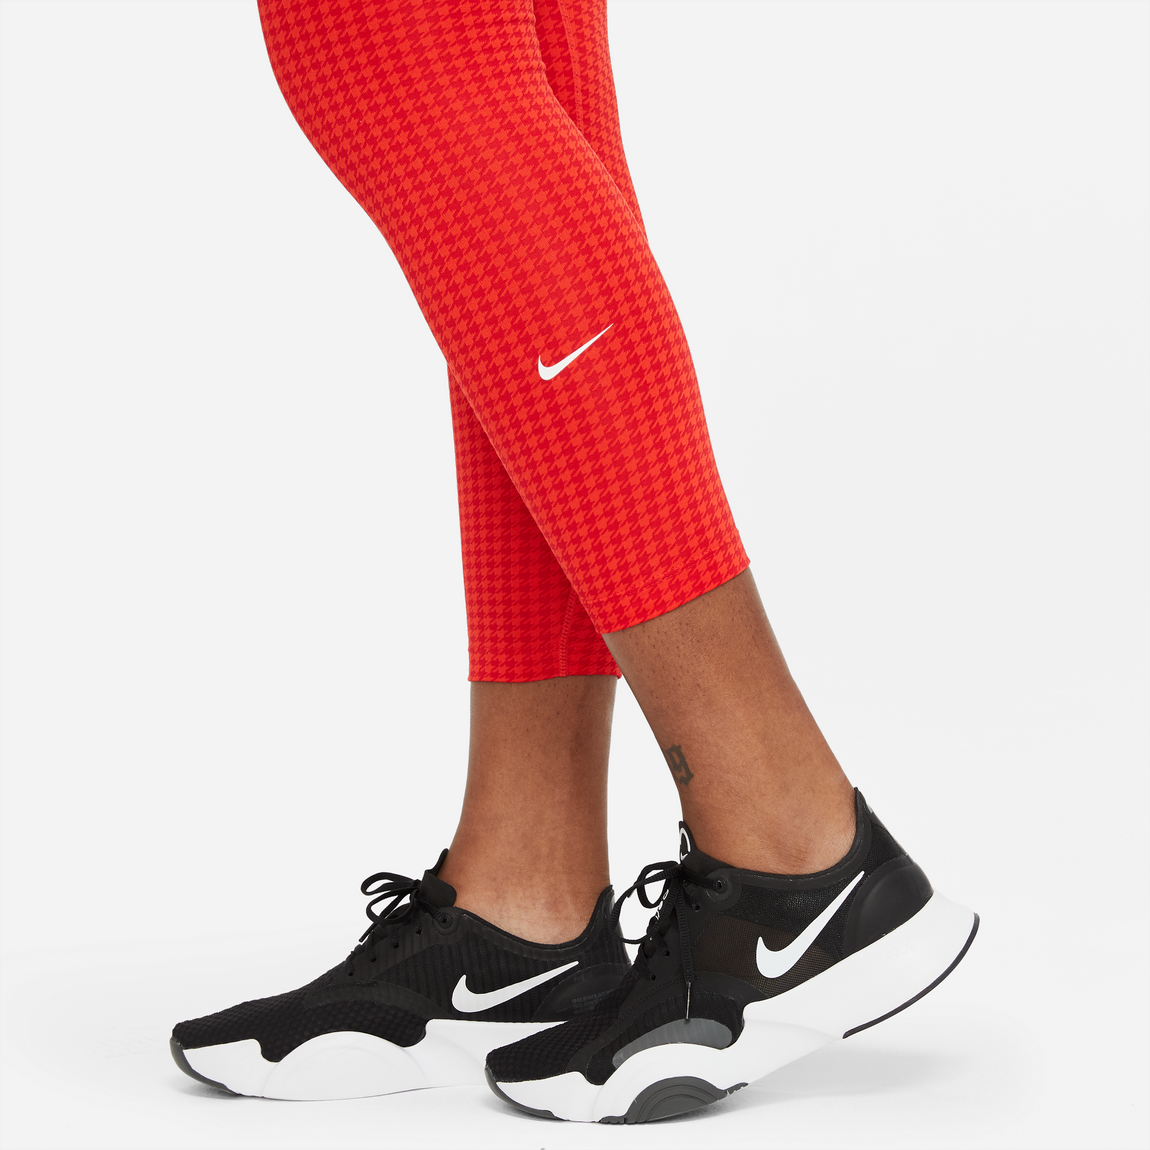 Nike Women's Dri FIT Fast Crop Tights (Chile Red/Reflective Silv, Size L)